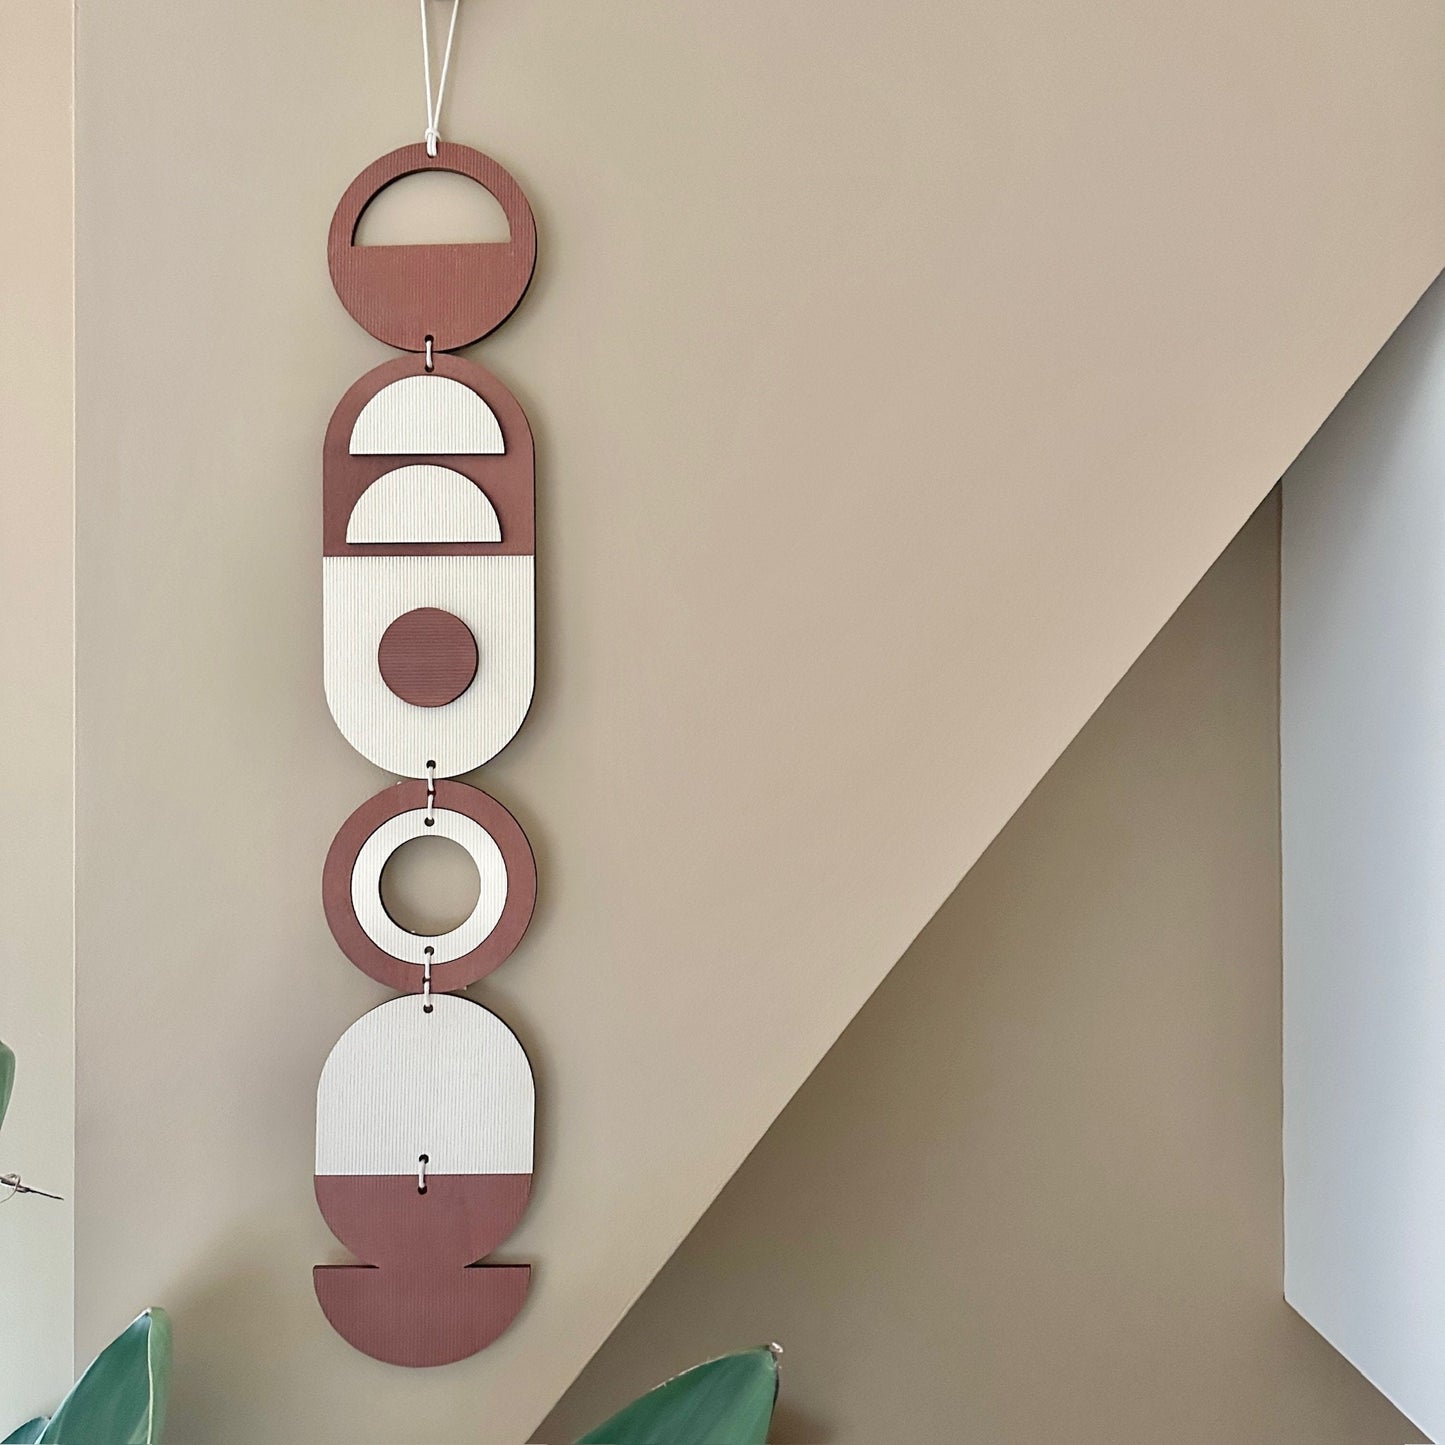 Terracotta Wall Hanging Gift - Geometric Wall Art - New Home Gift - Housewarming Present - Mid-Century Home Decor - Art Gifting